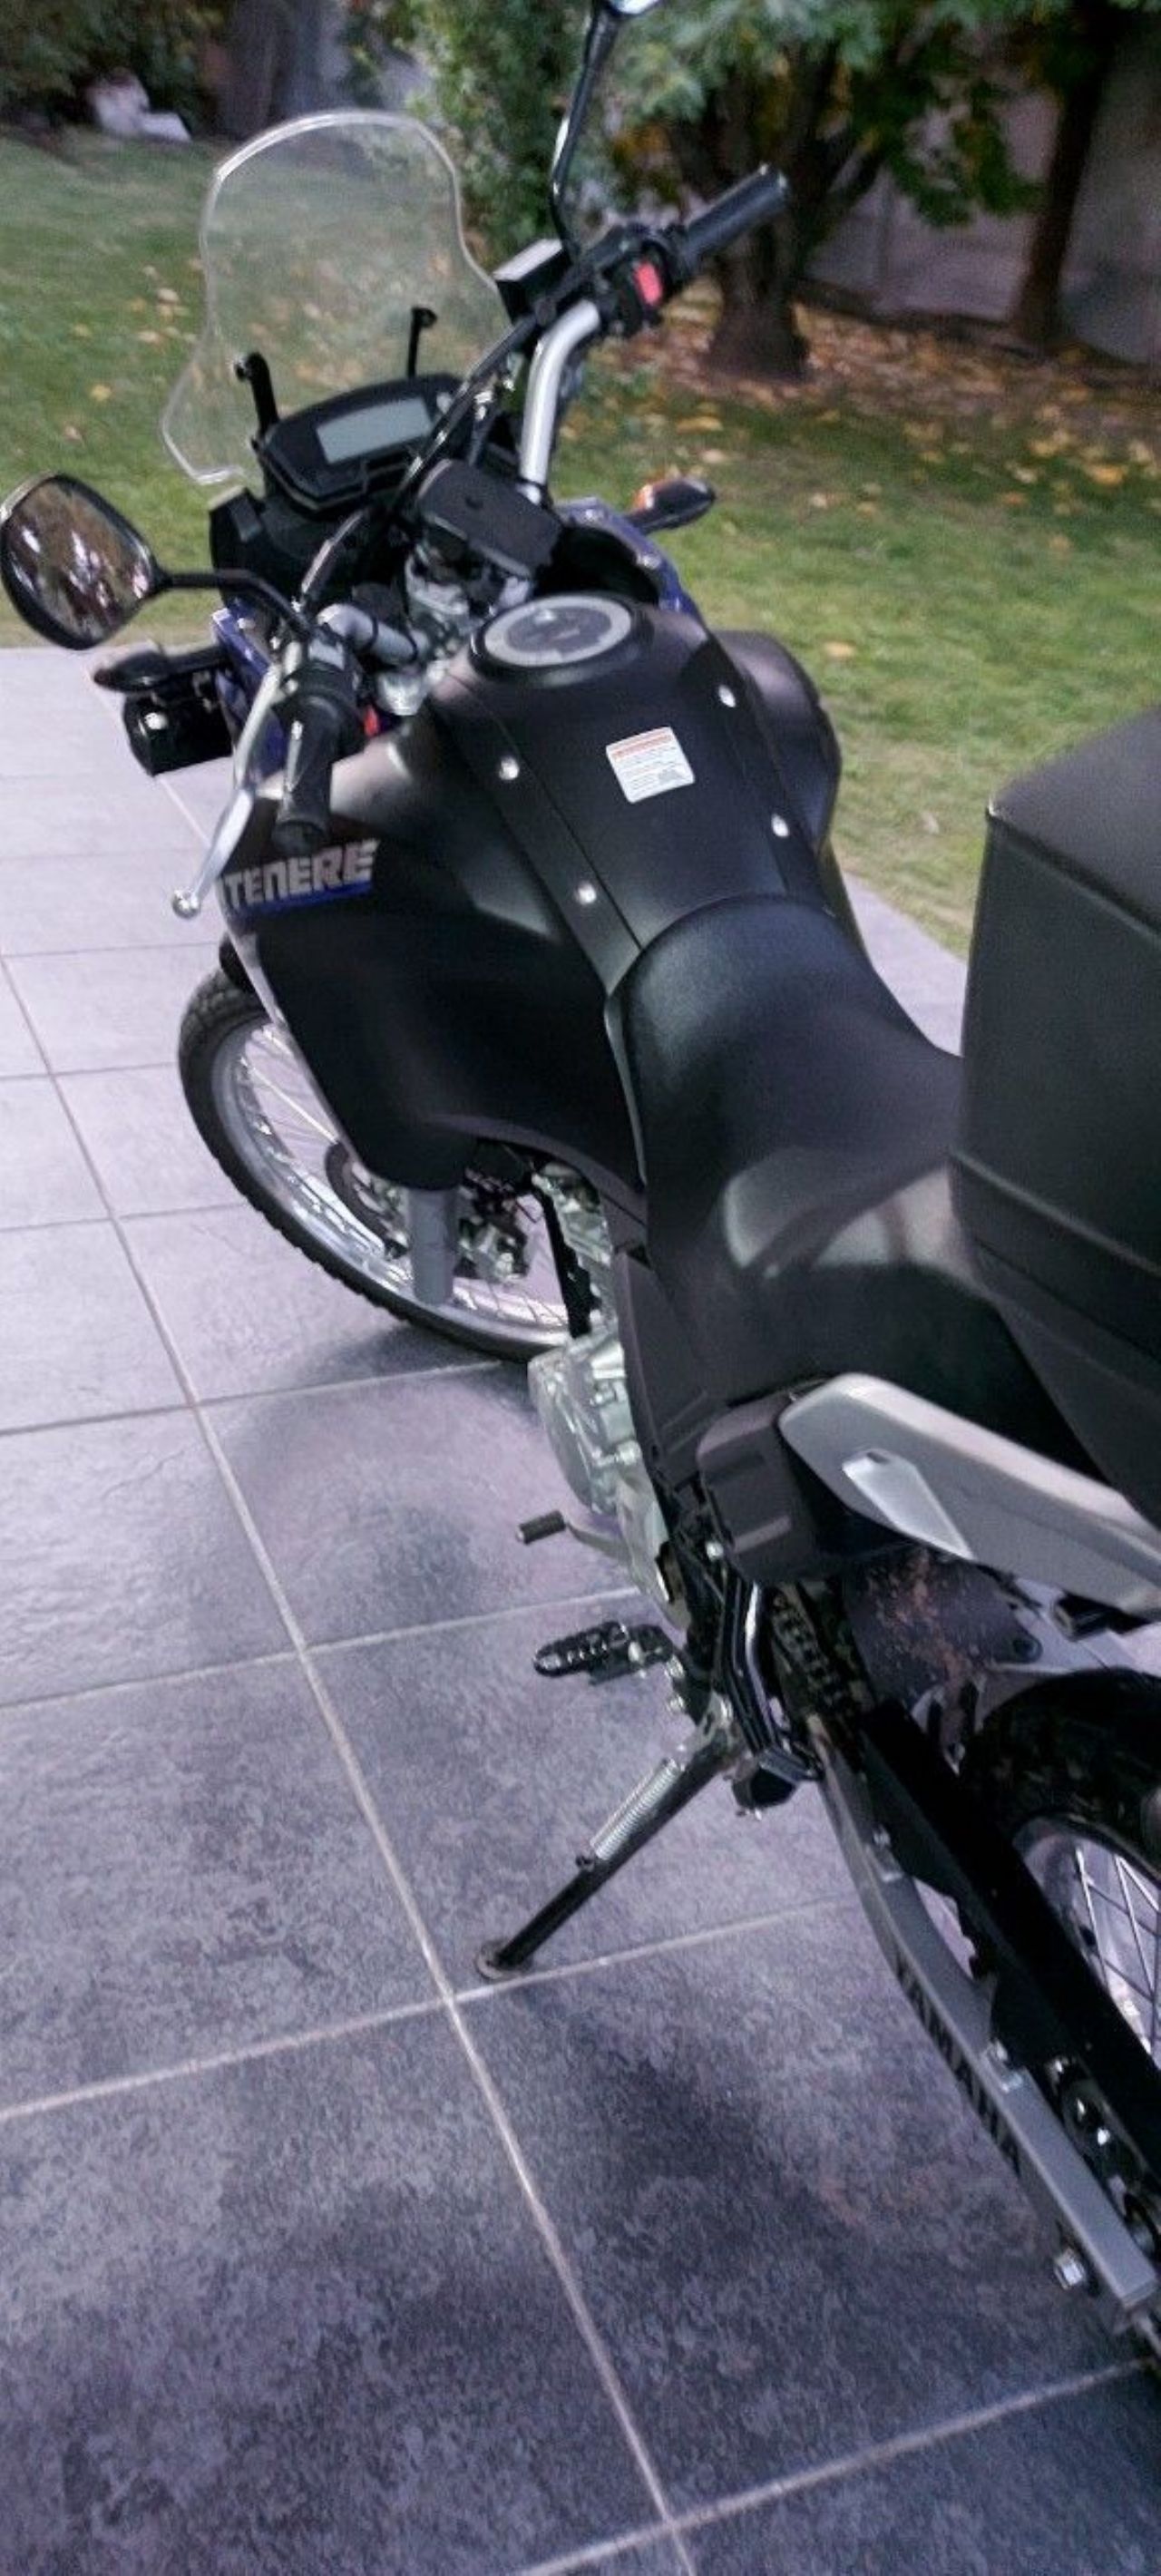 Yamaha XTZ Usada en Mendoza, deRuedas